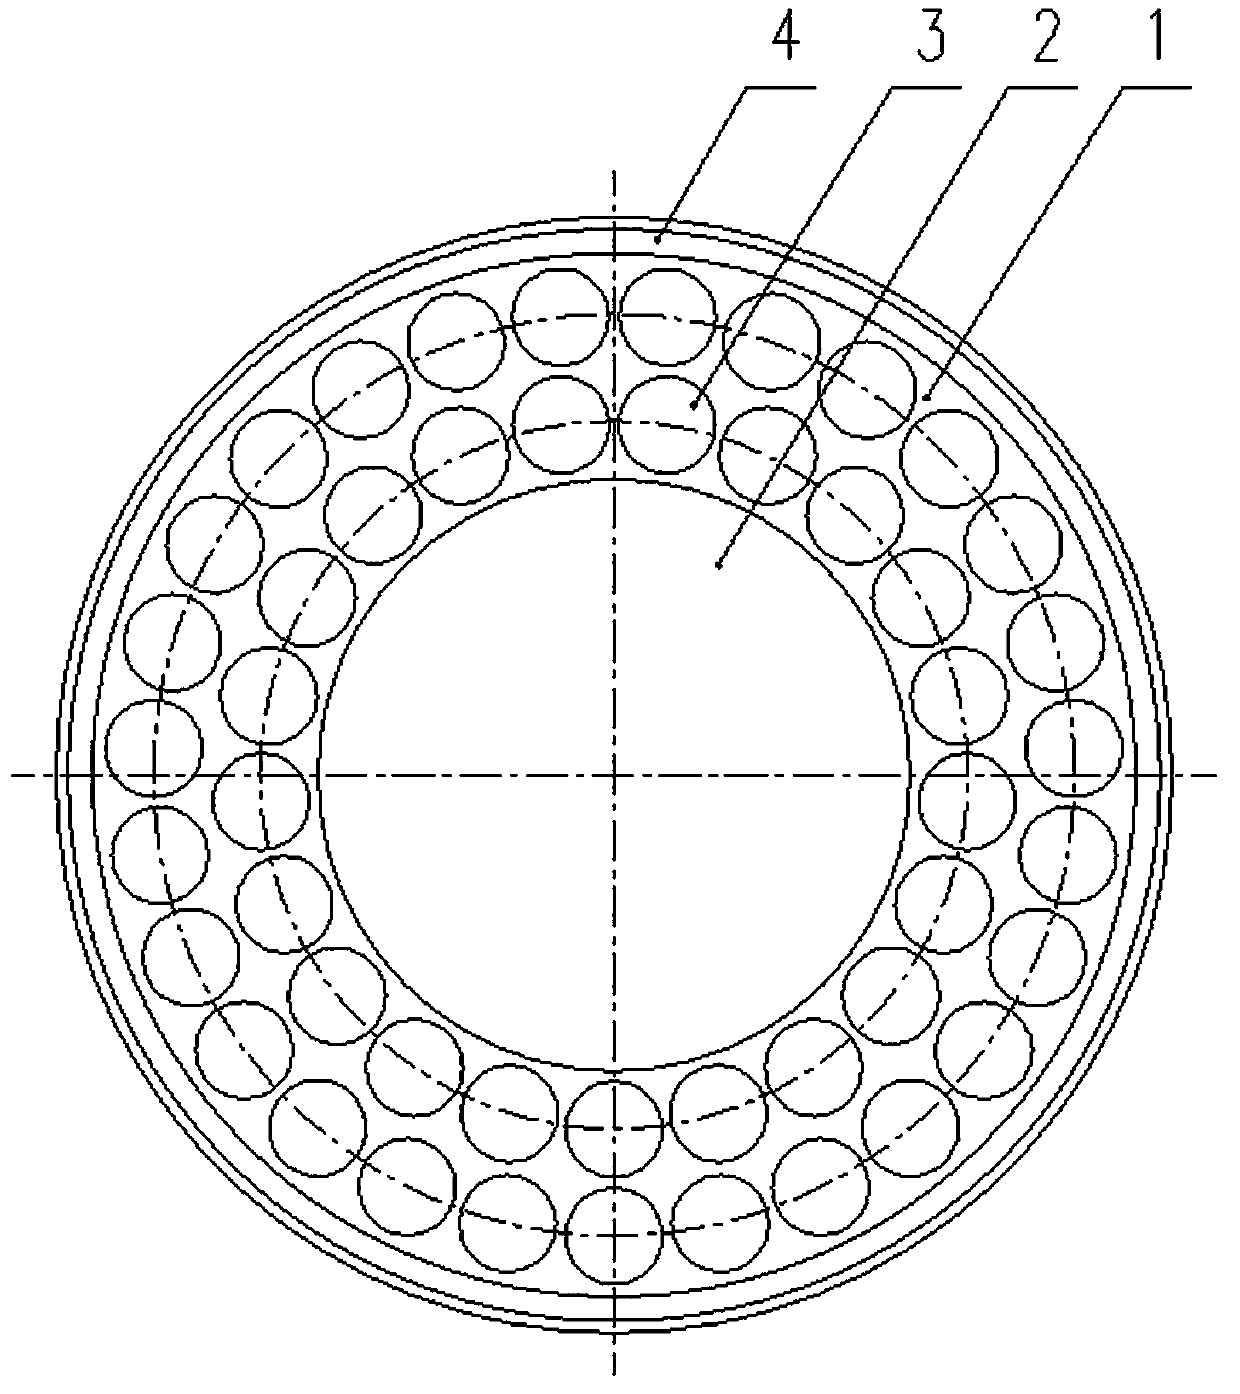 Distribution mode of nonmetal sliding plate of friction pair of bridge bearing